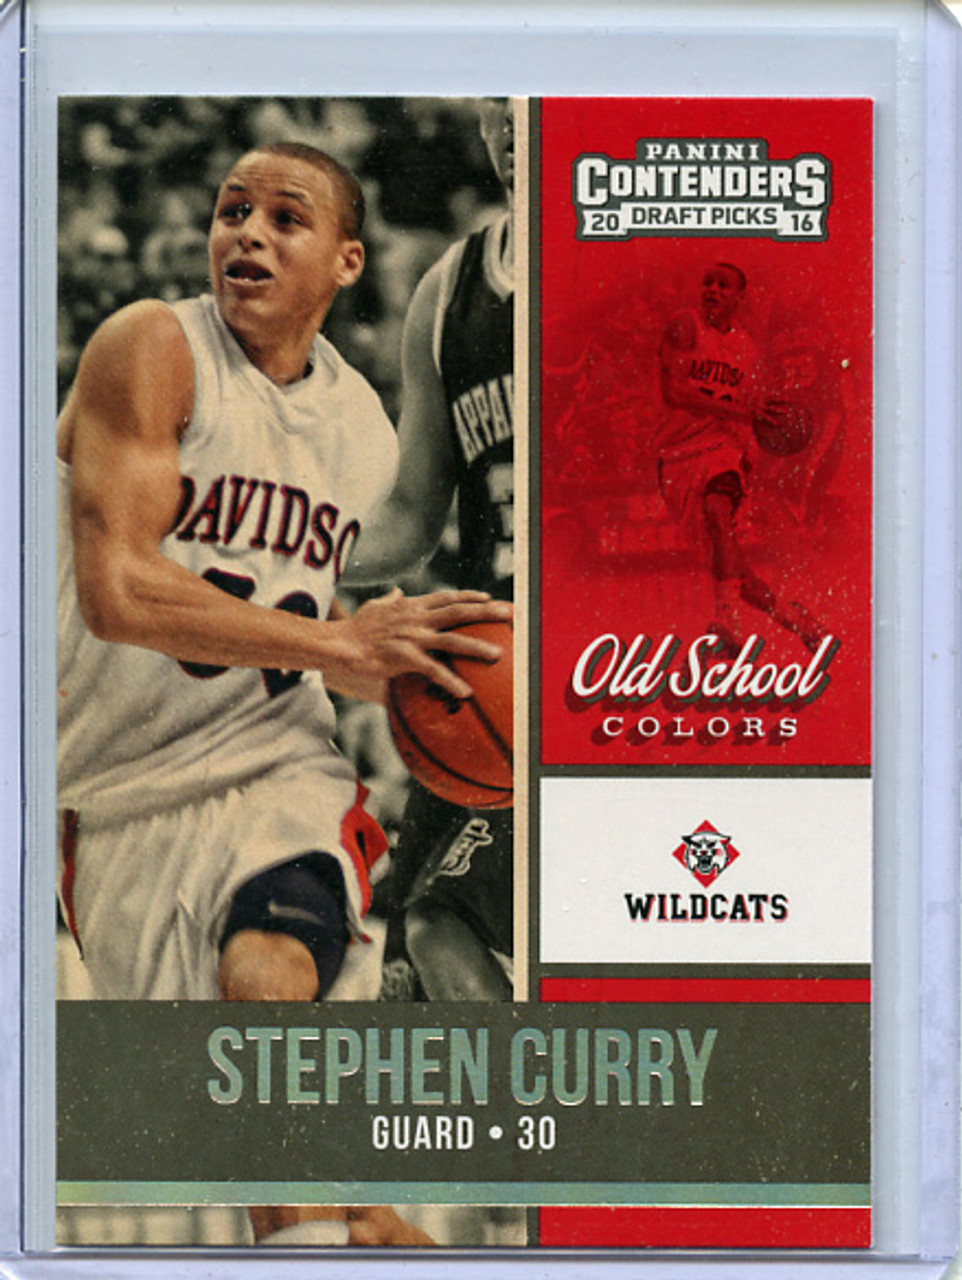 Stephen Curry 2016-17 Contenders Draft Picks, Old School Colors #19